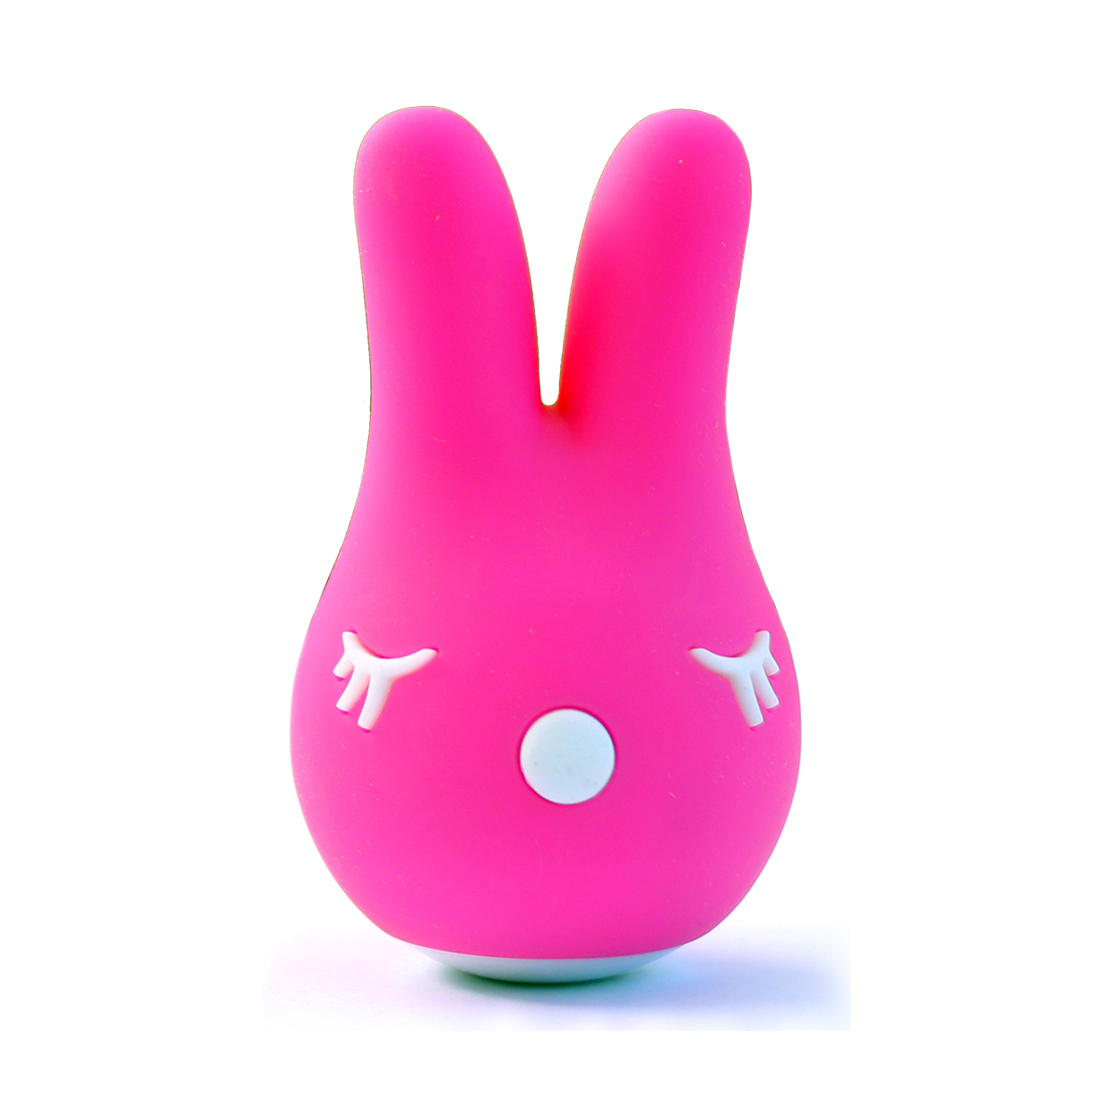 Bunny ears vibrator